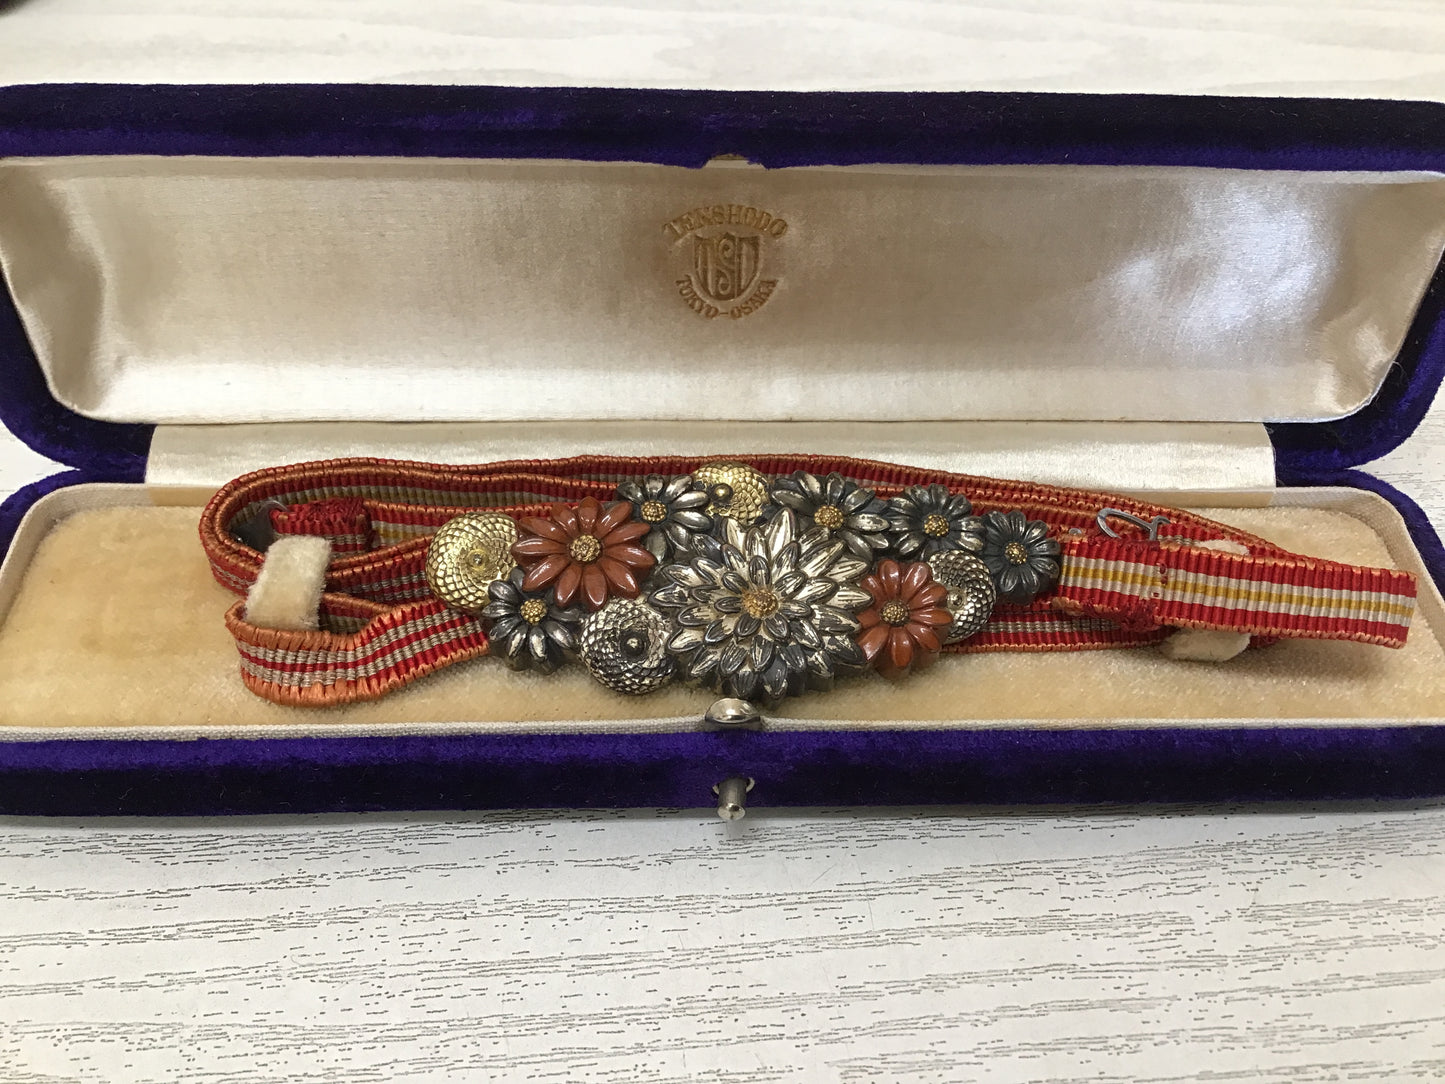 Y2296 OBIDOME Metalwork Sash Clip brooch Flower signed box Japan Kimono antique